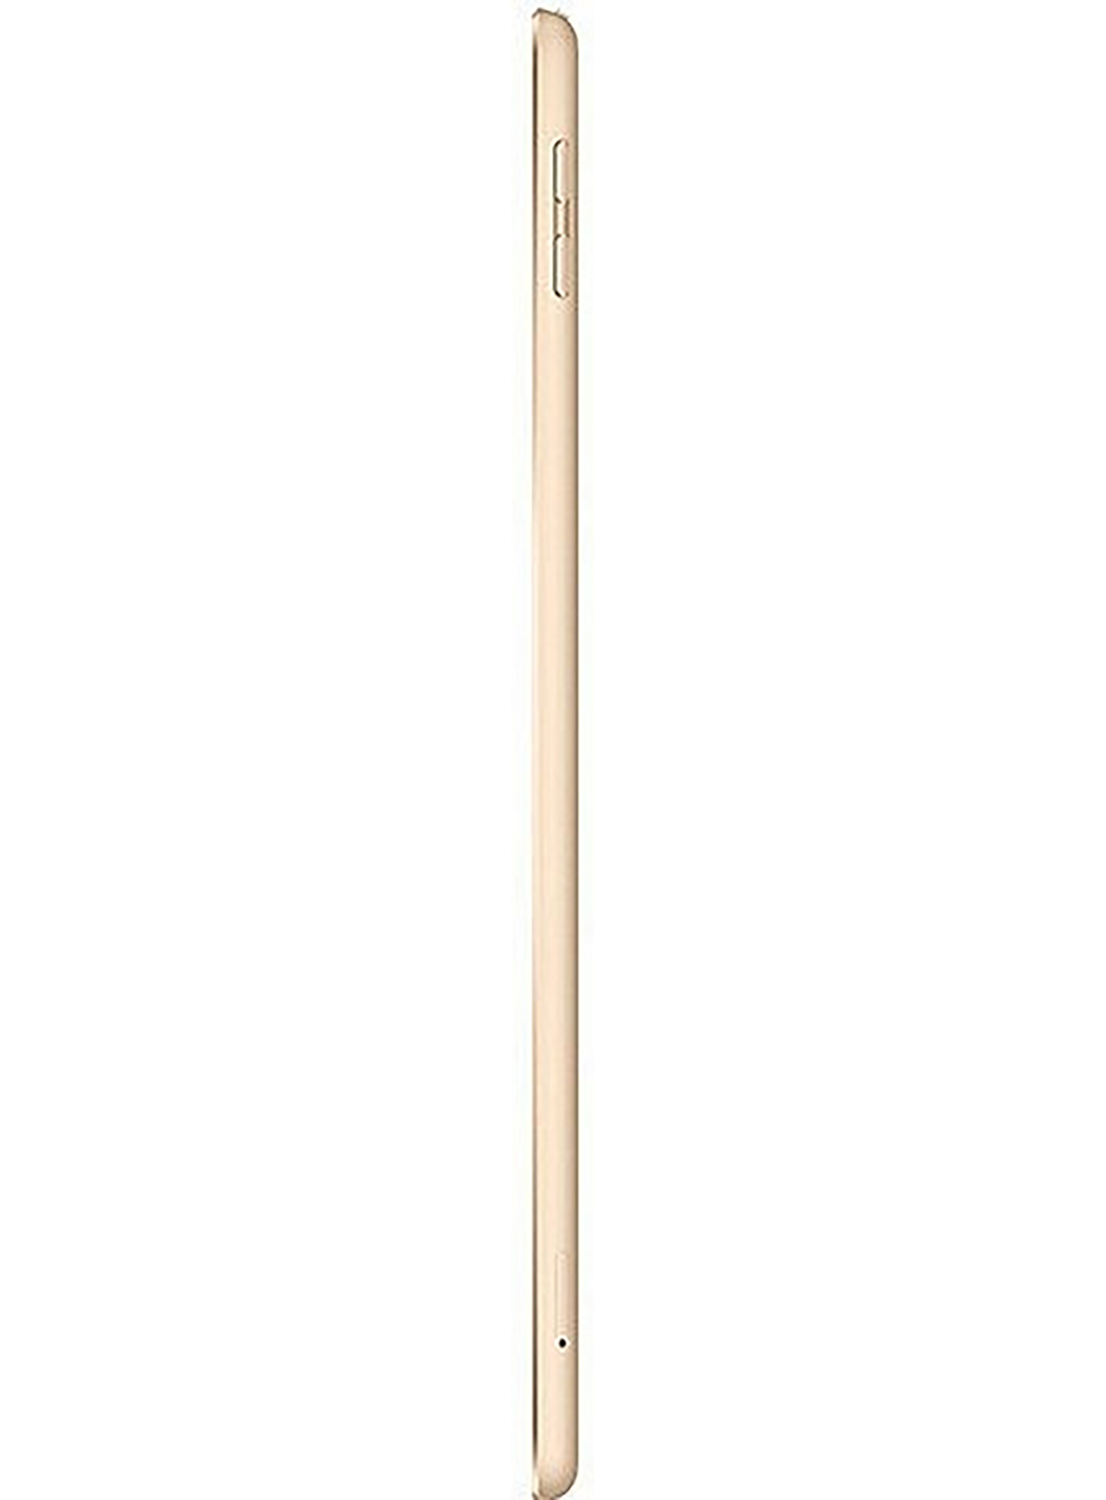 Apple iPad 5.Gen (2017)